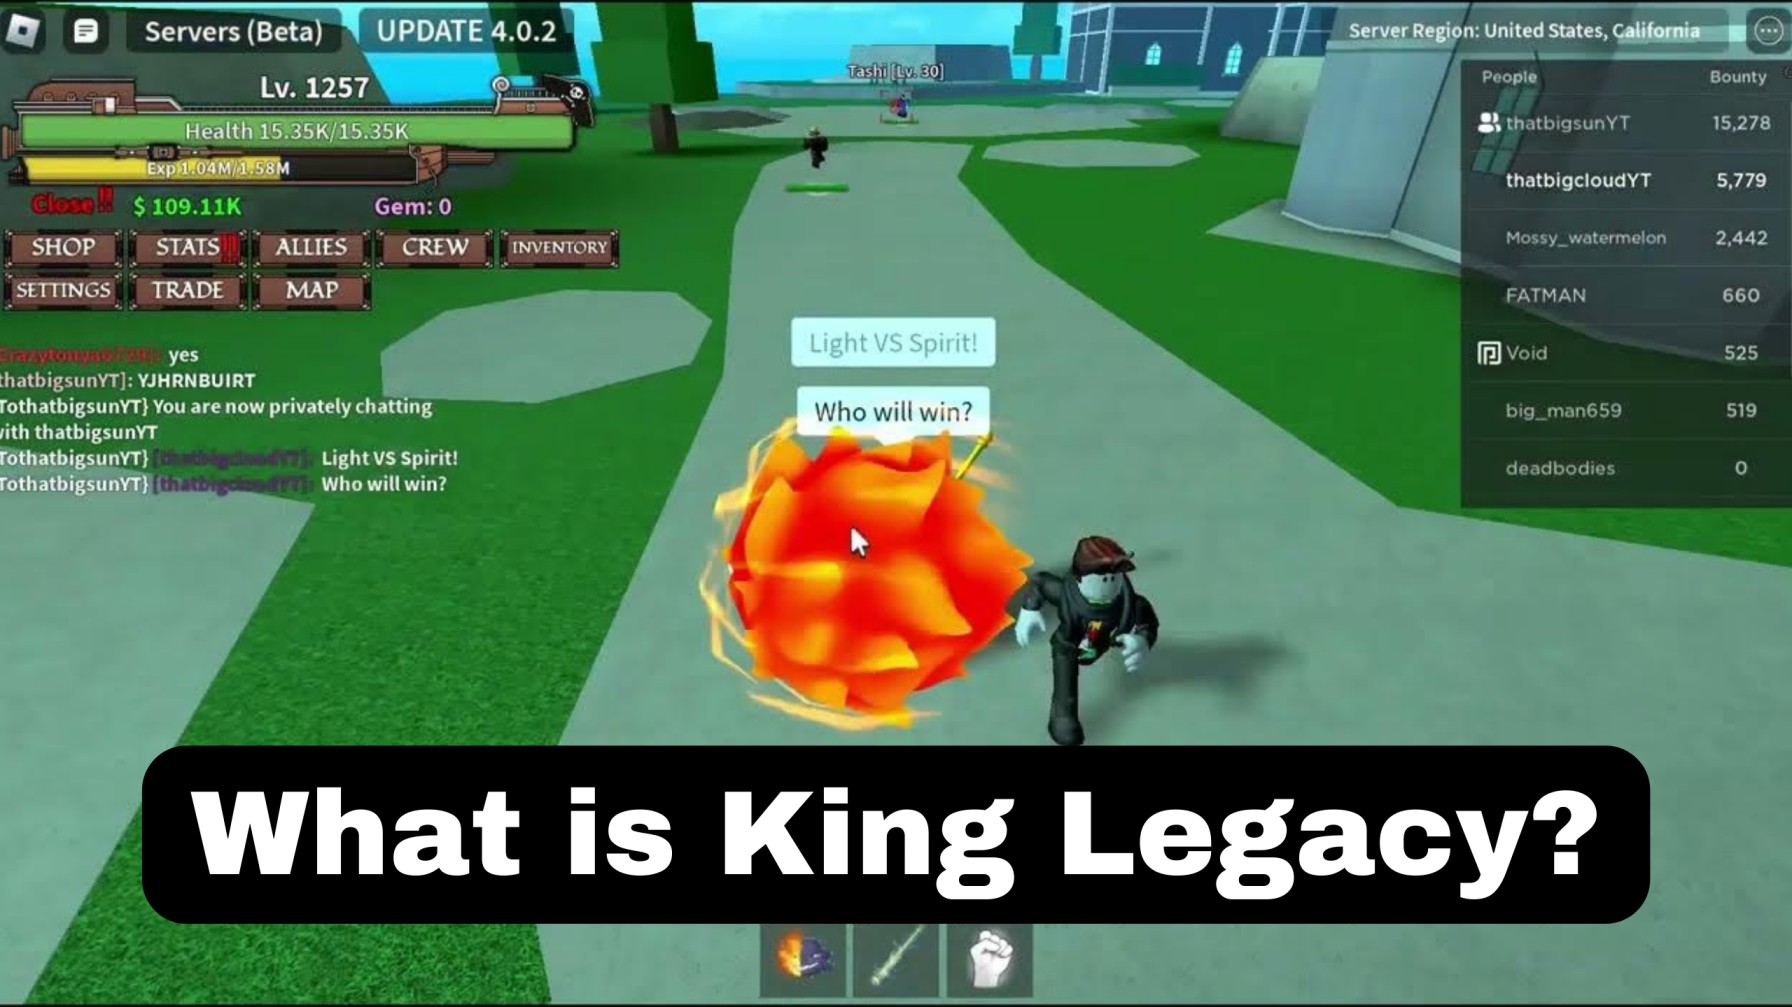 King Legacy Script